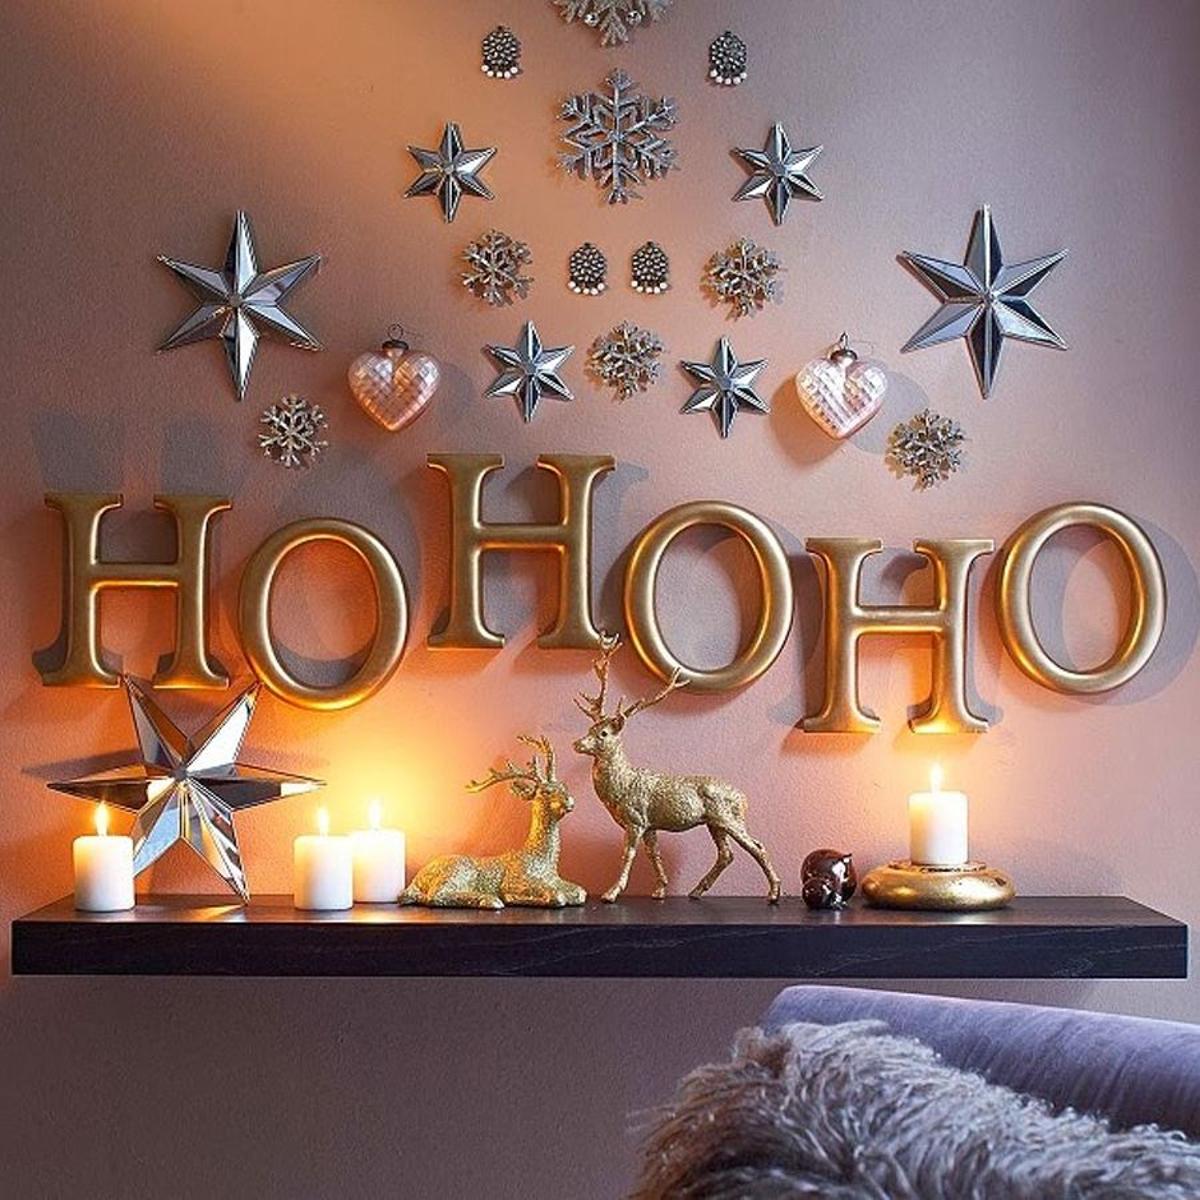 La mejor decoración navideña: luces de Home Decor